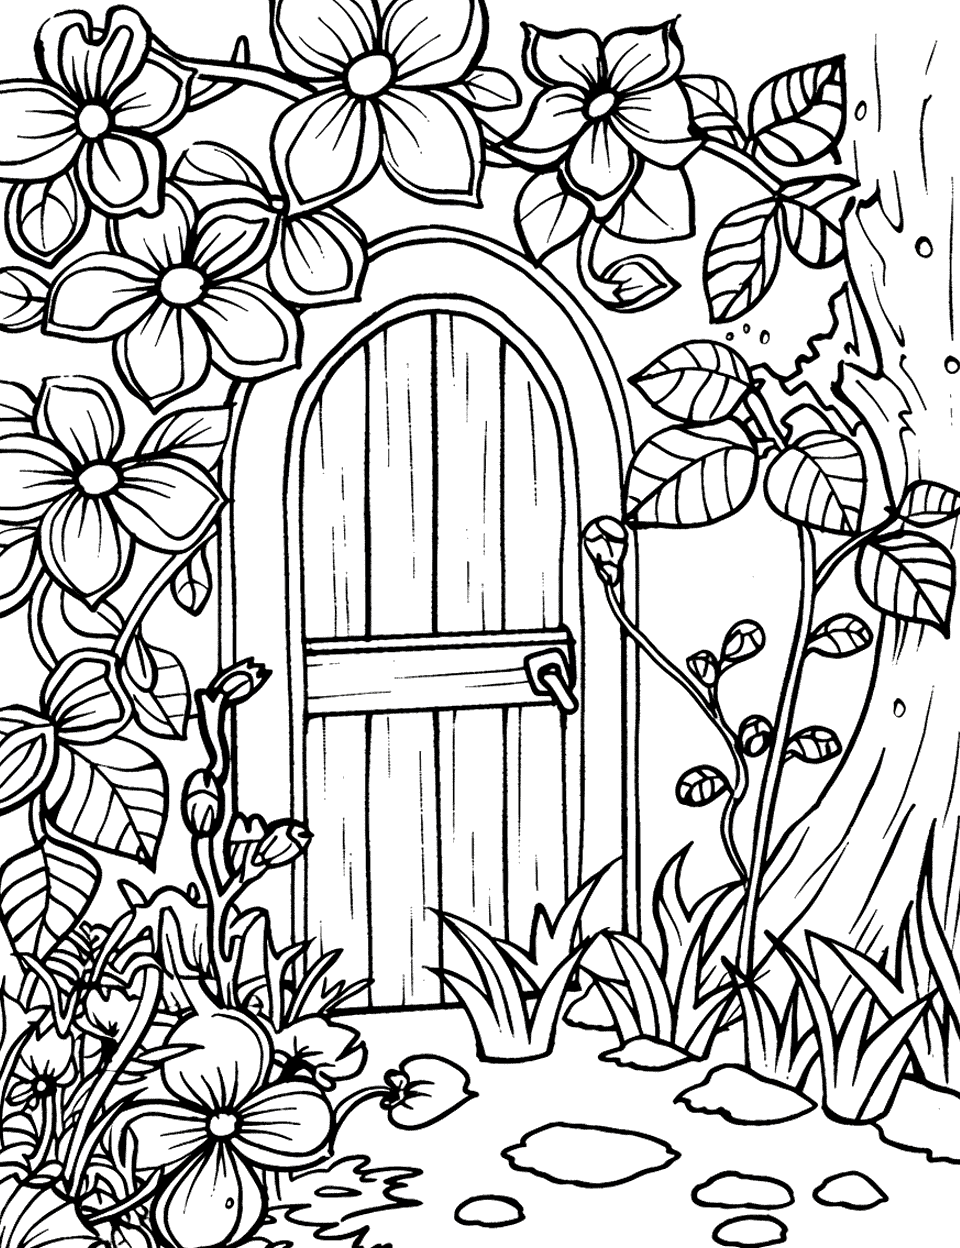 Hidden Door in a Secret Garden Coloring Page - An ornate, mysterious door partially hidden by thick ivy in a secret garden.